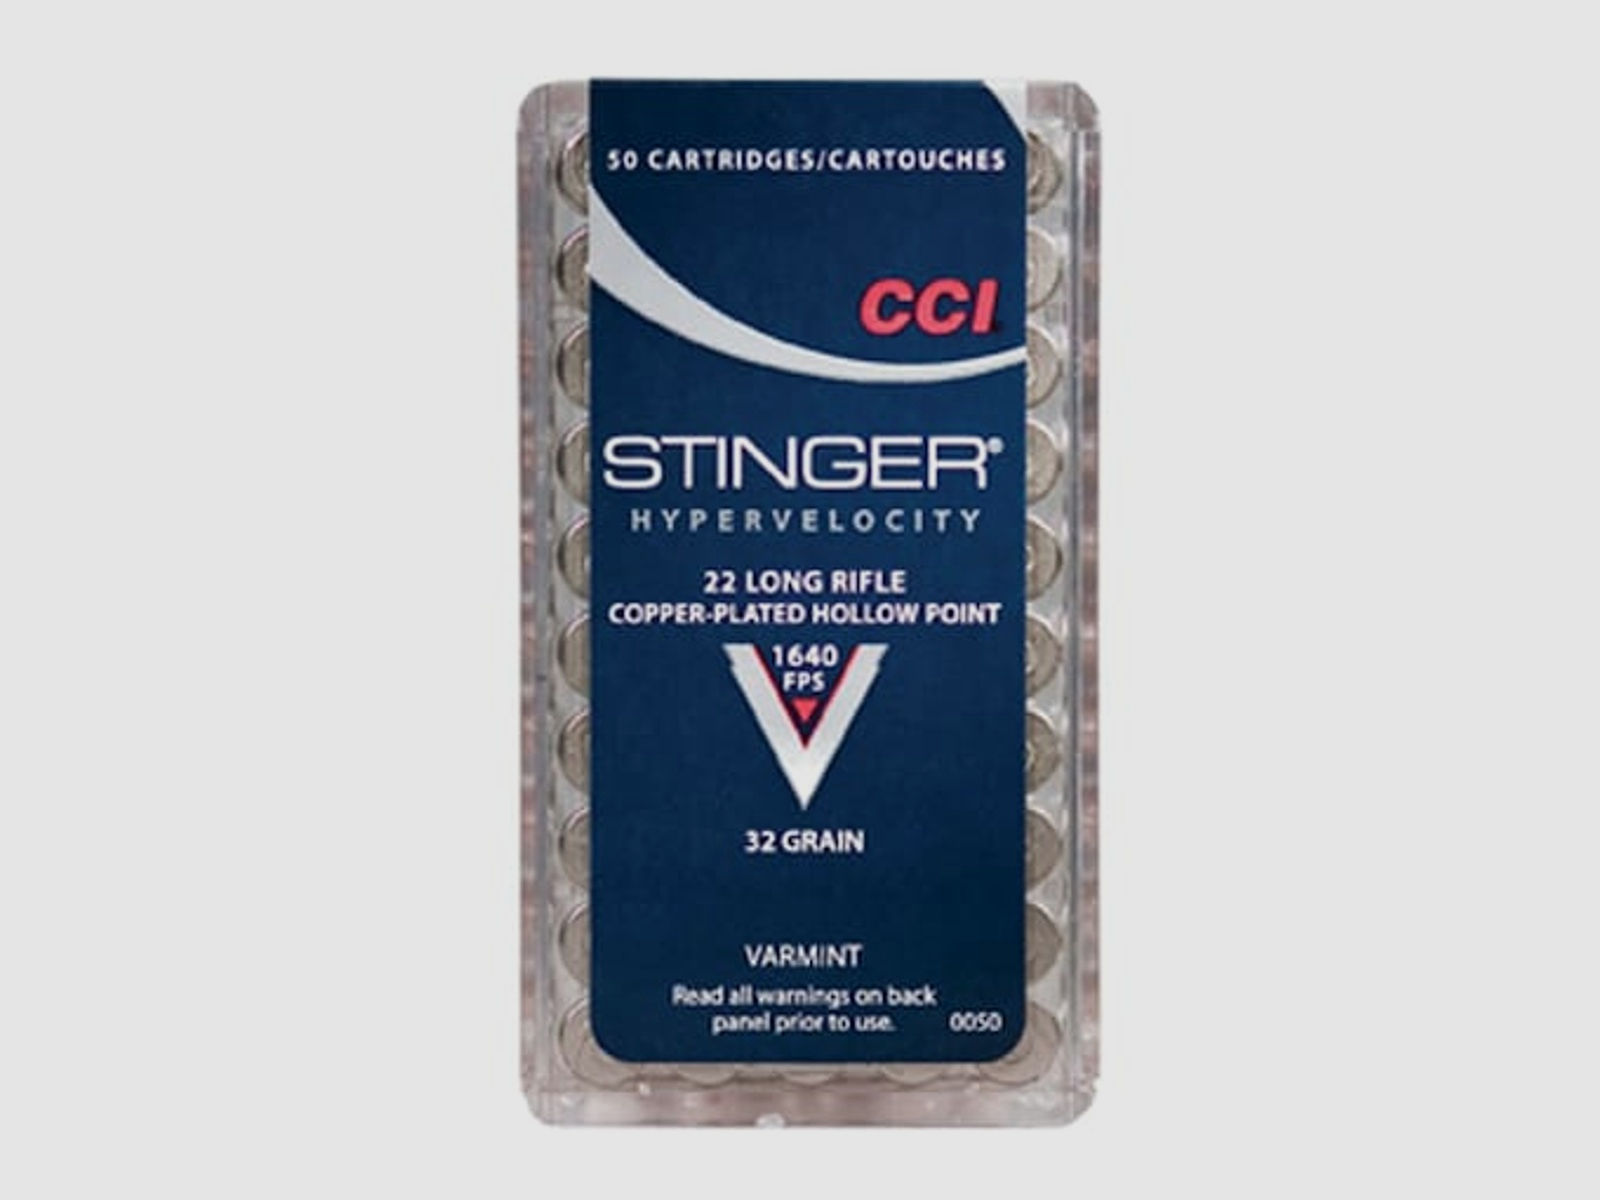 CCI Stinger .22 LR 32GR CPHP 50 Patronen